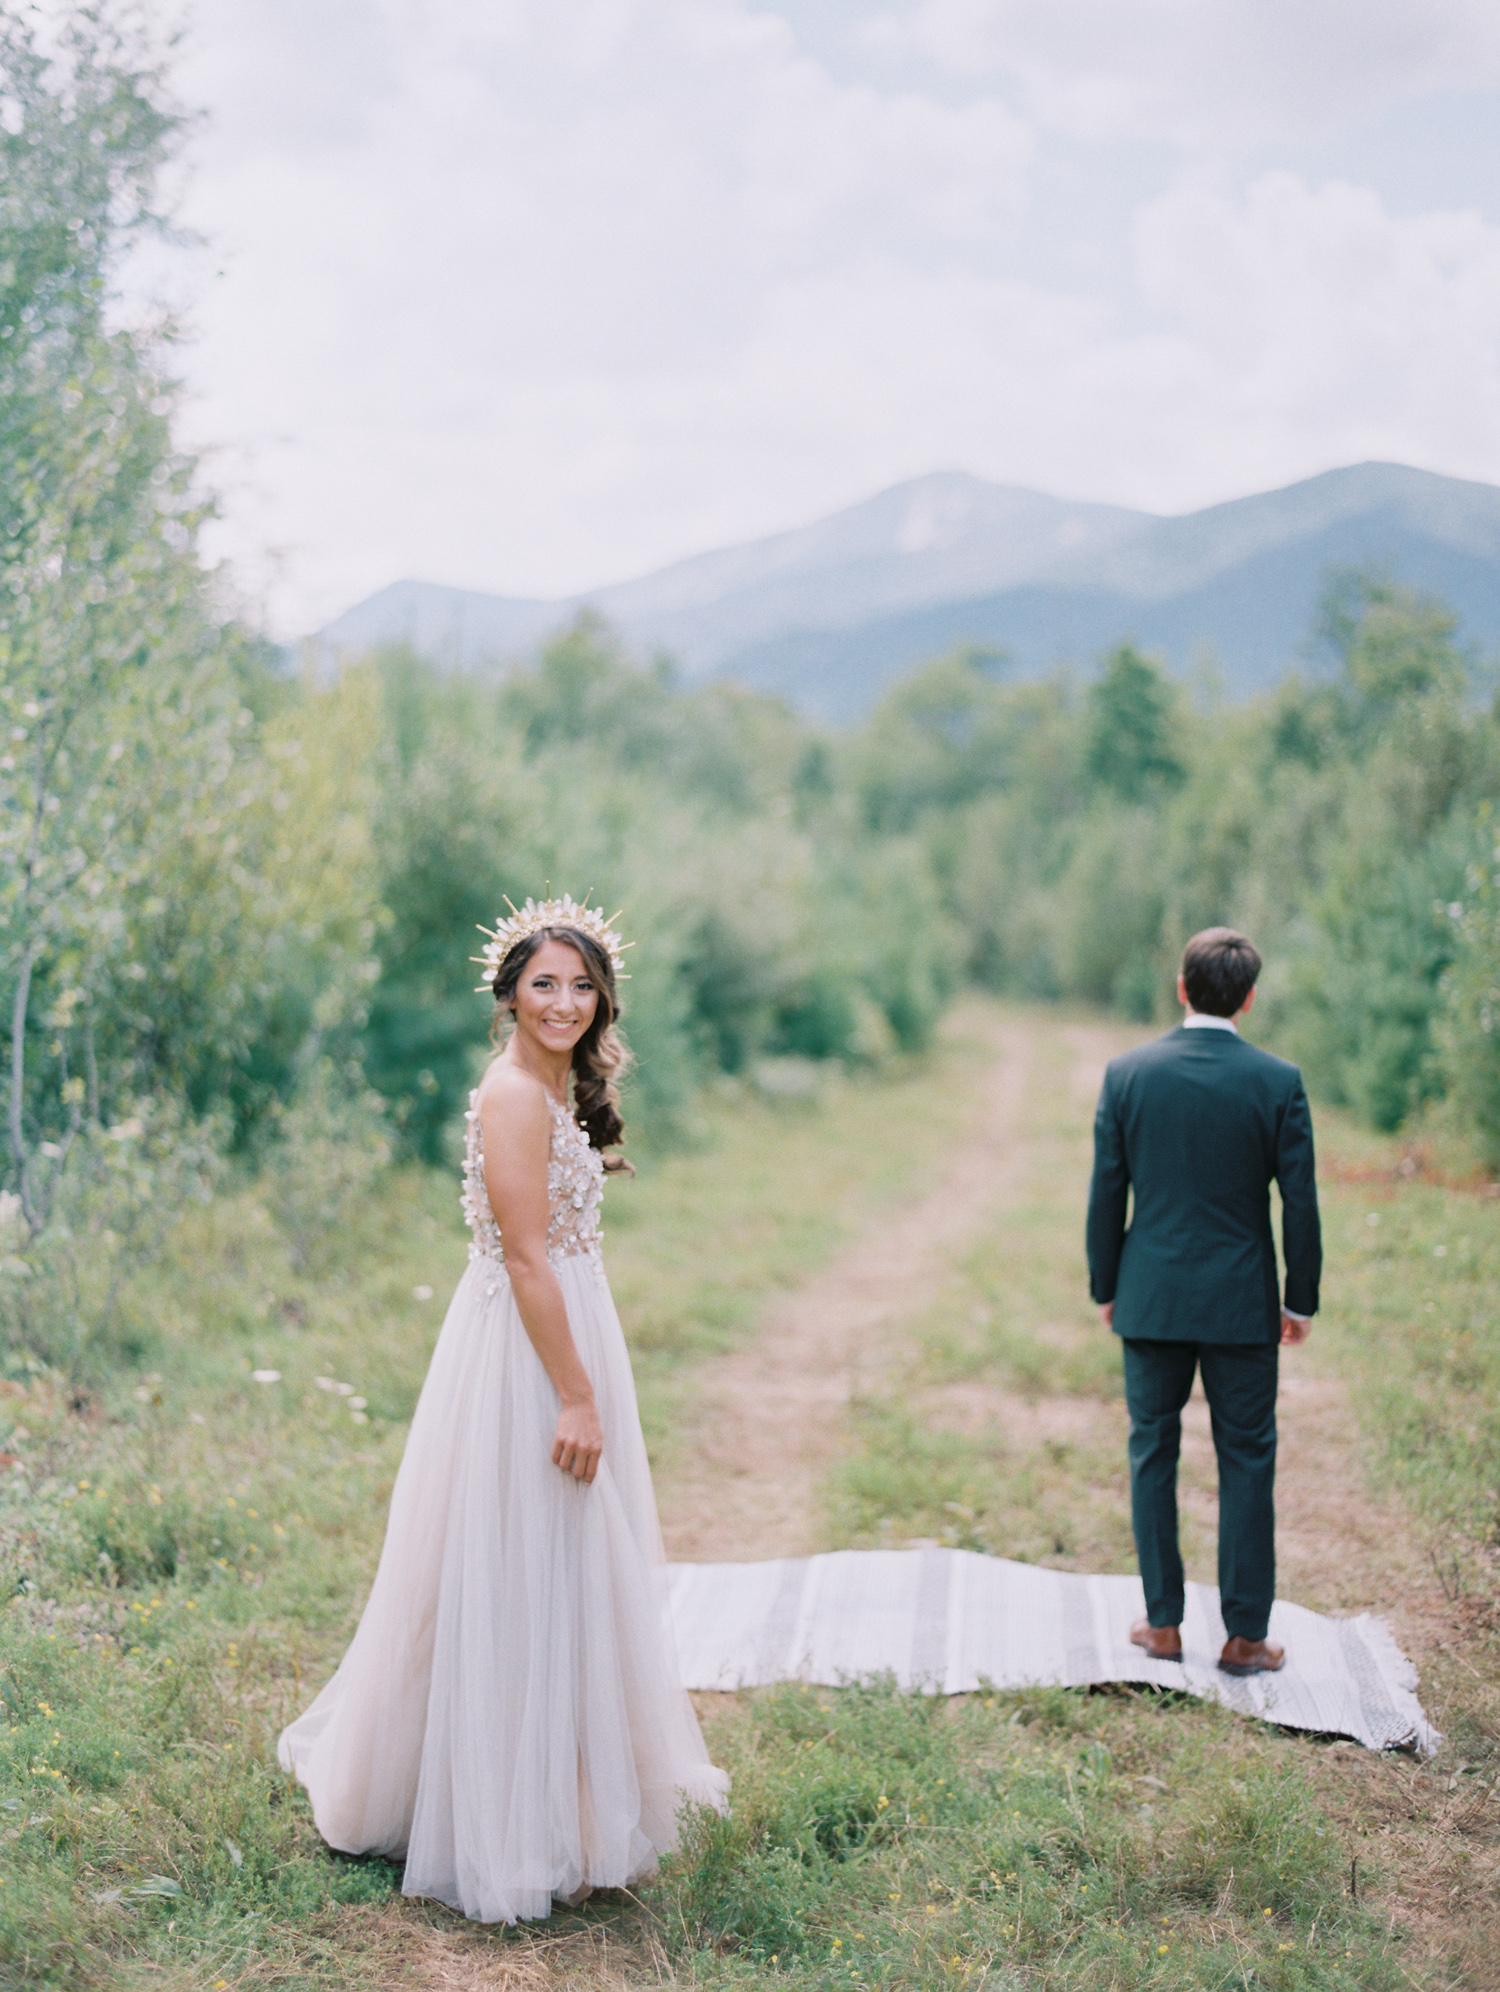 Adirondack Mountain Wedding | Luxury Bridal fashion and laid back elegance make this mountain wedding one to remember. Photographed by Mary Dougherty